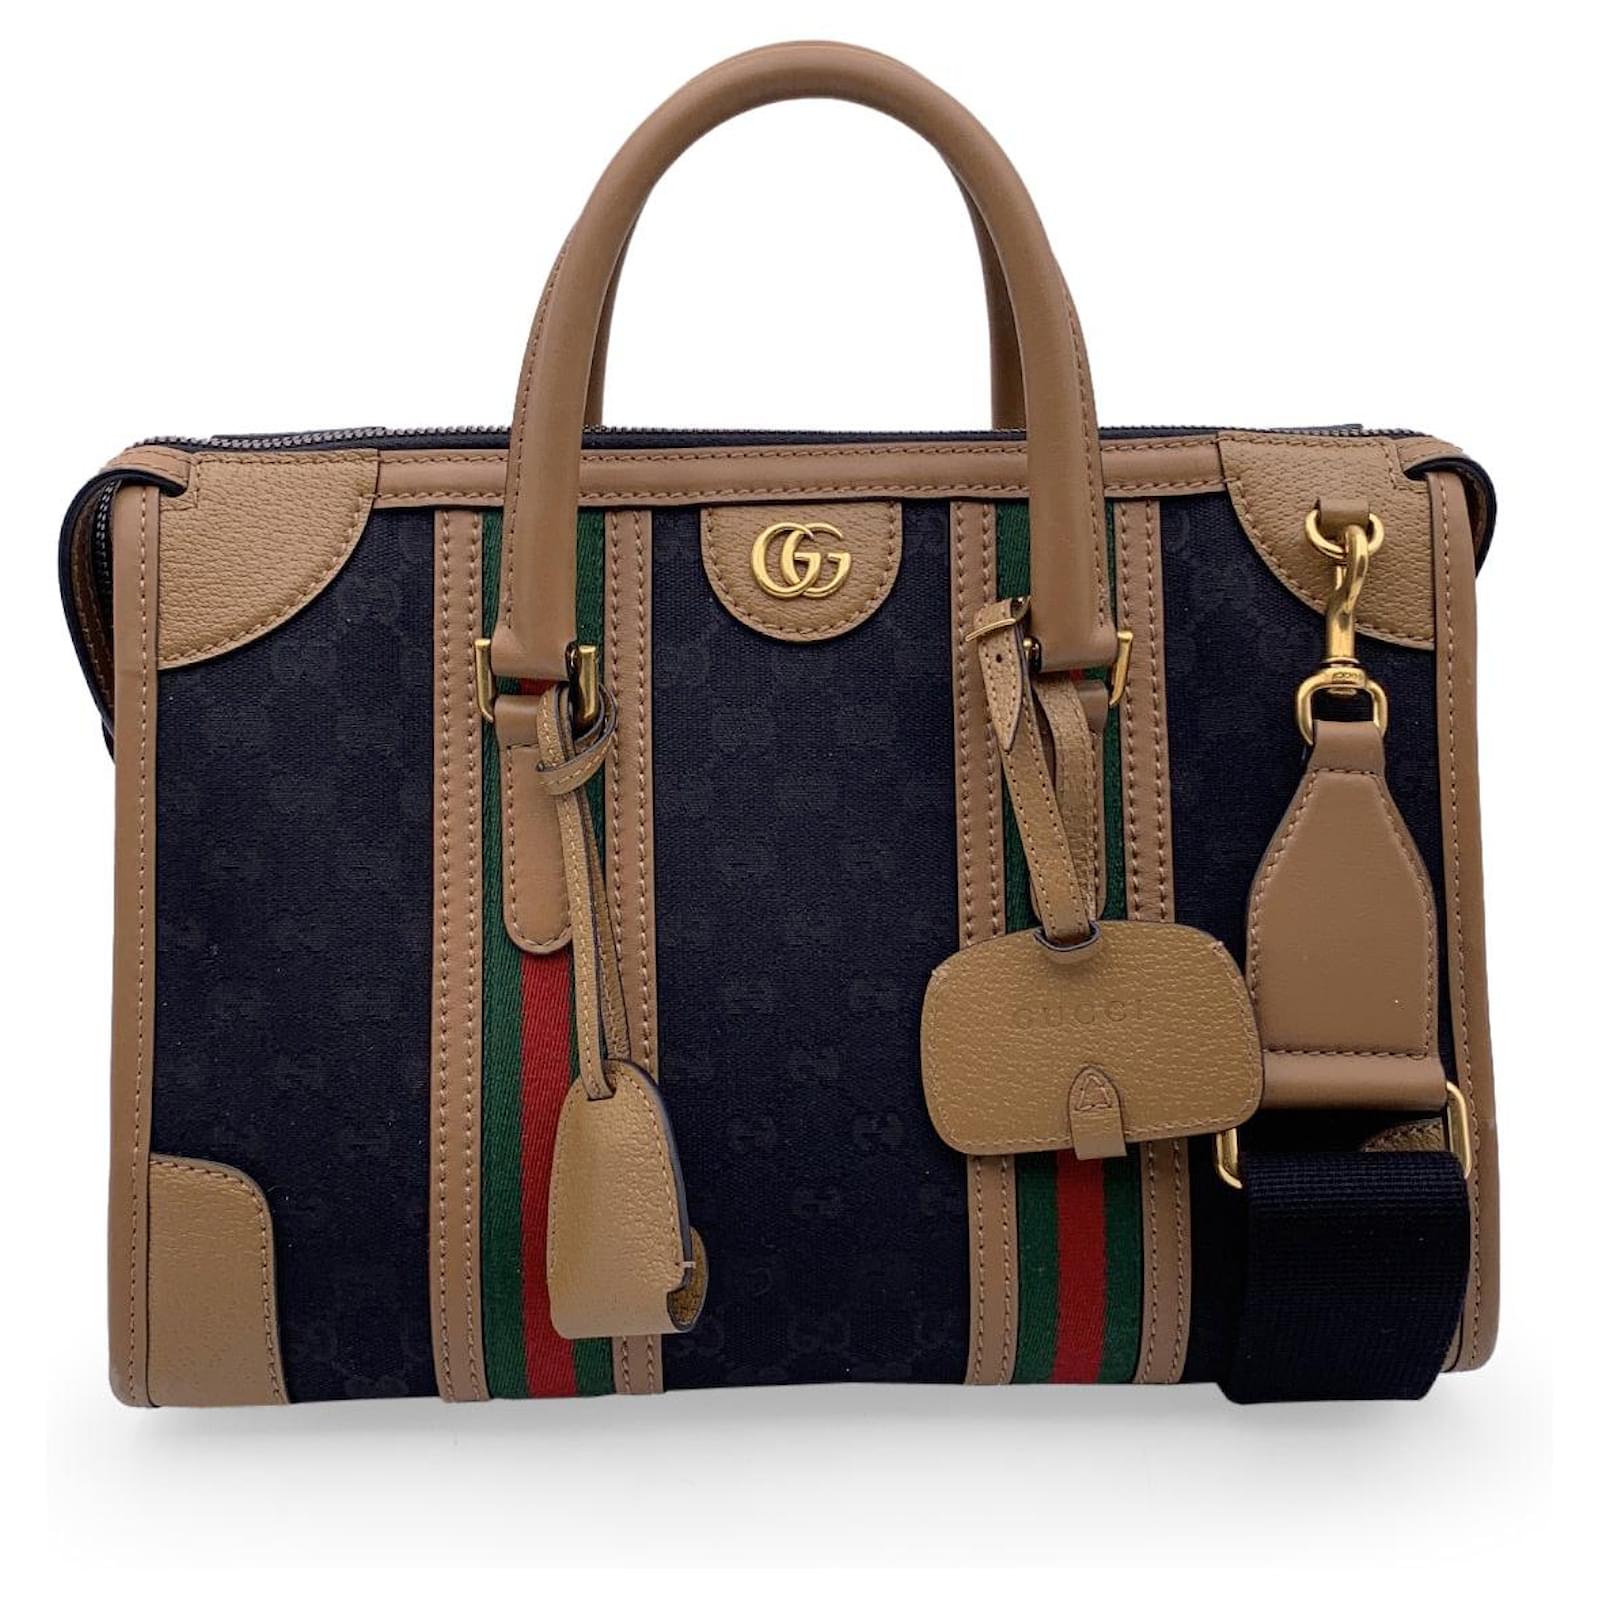 Gucci Bauletto maxi duffle bag - ShopStyle